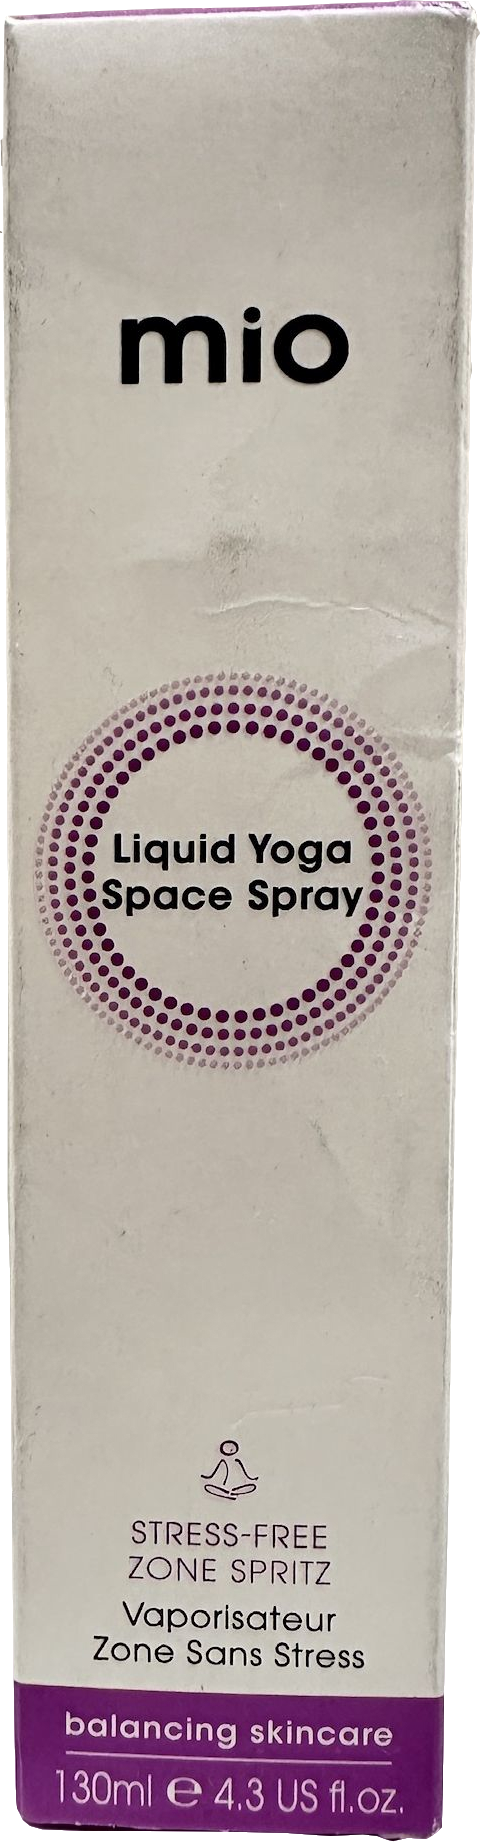 mio Liquid Yoga Space Spray 130ml